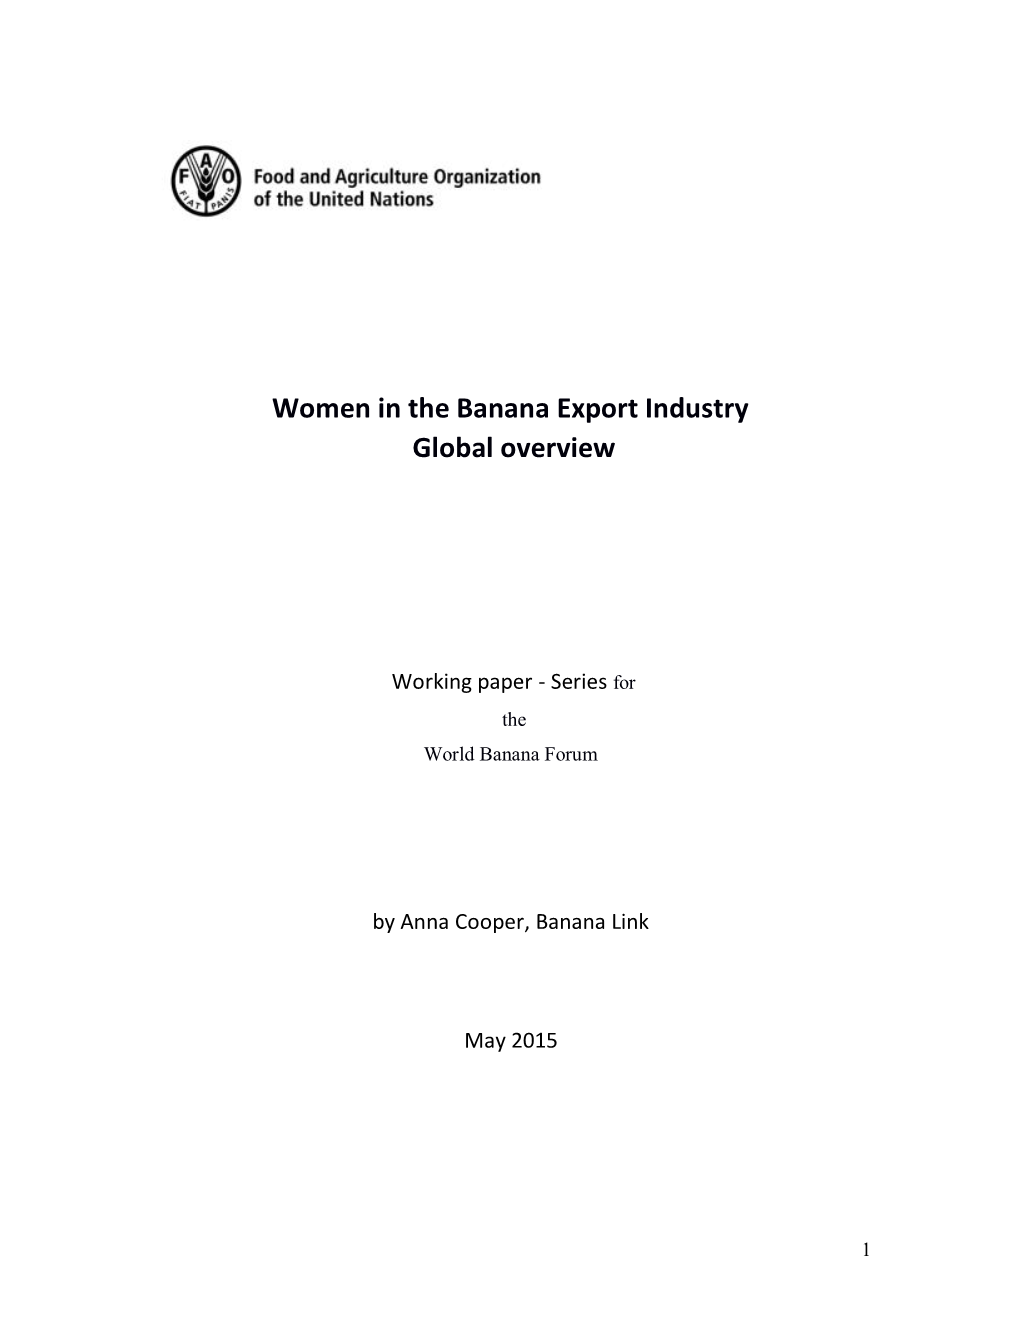 Women in the Banana Export Industry Global Overview